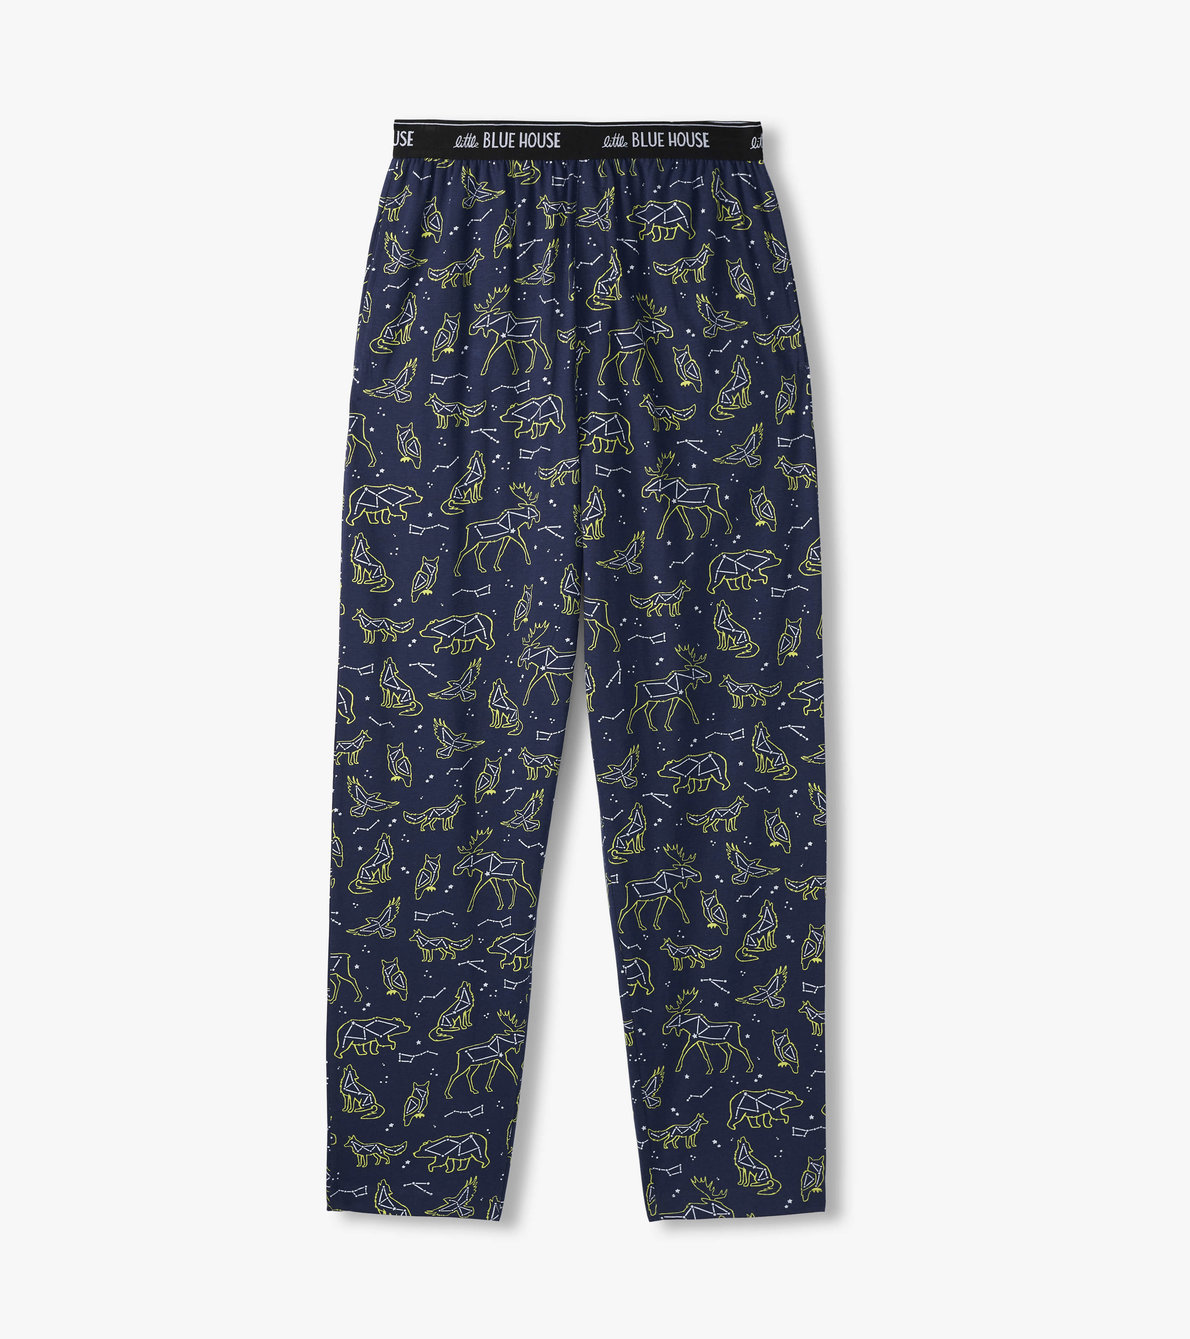 View larger image of Animal Constellations Men's Jersey Pajama Pants